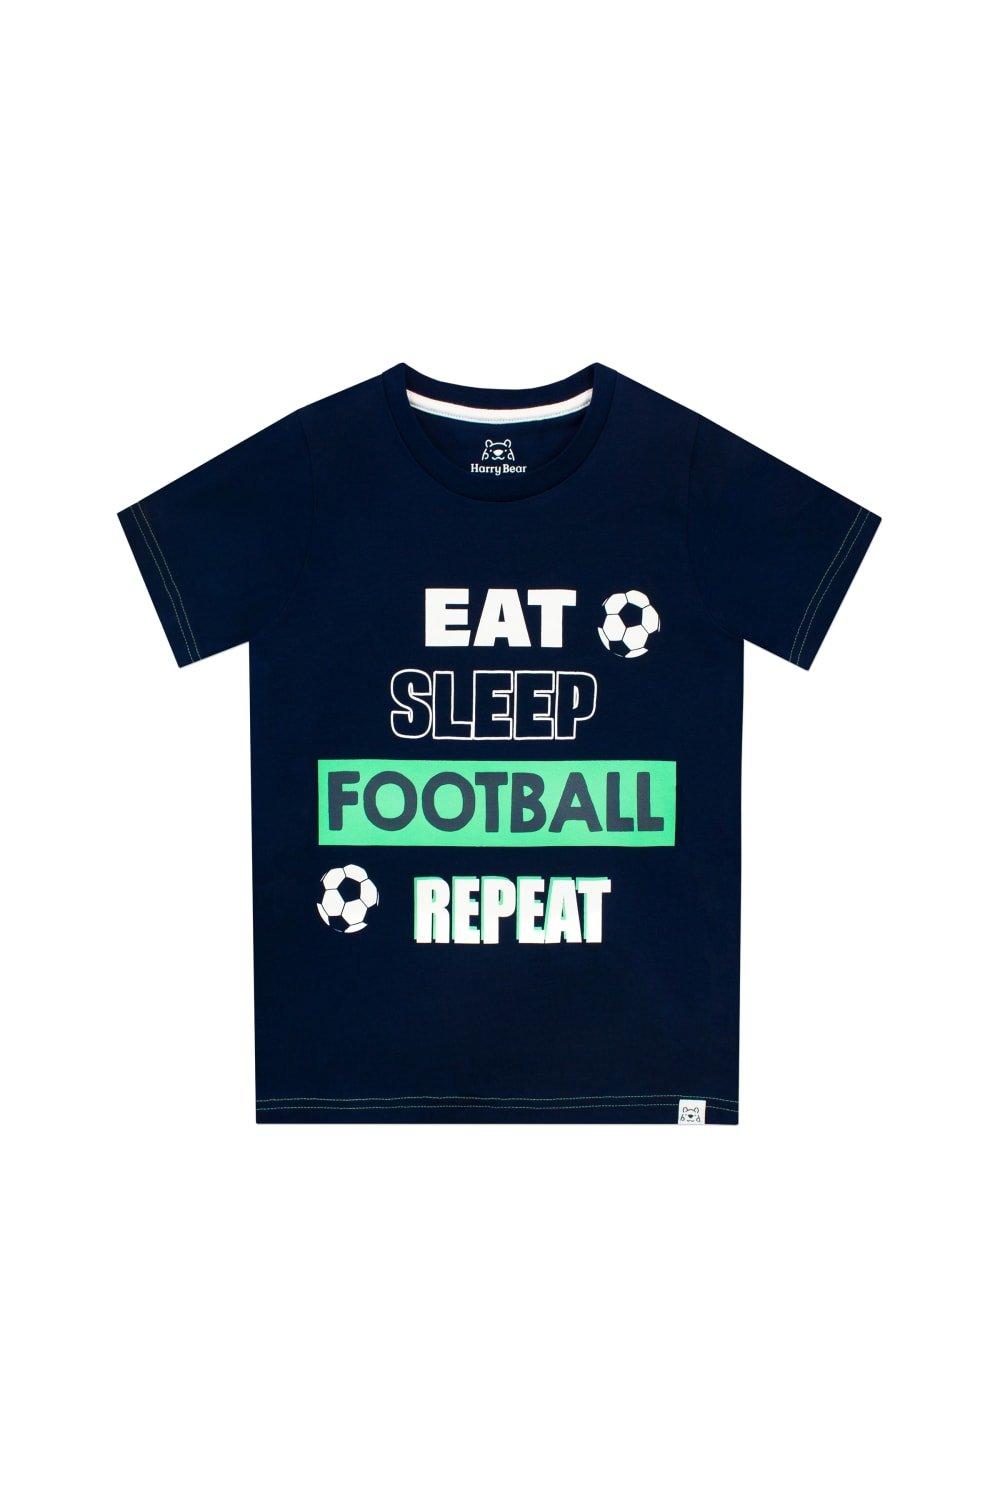 Eat Sleep Repeat Football T-Shirt